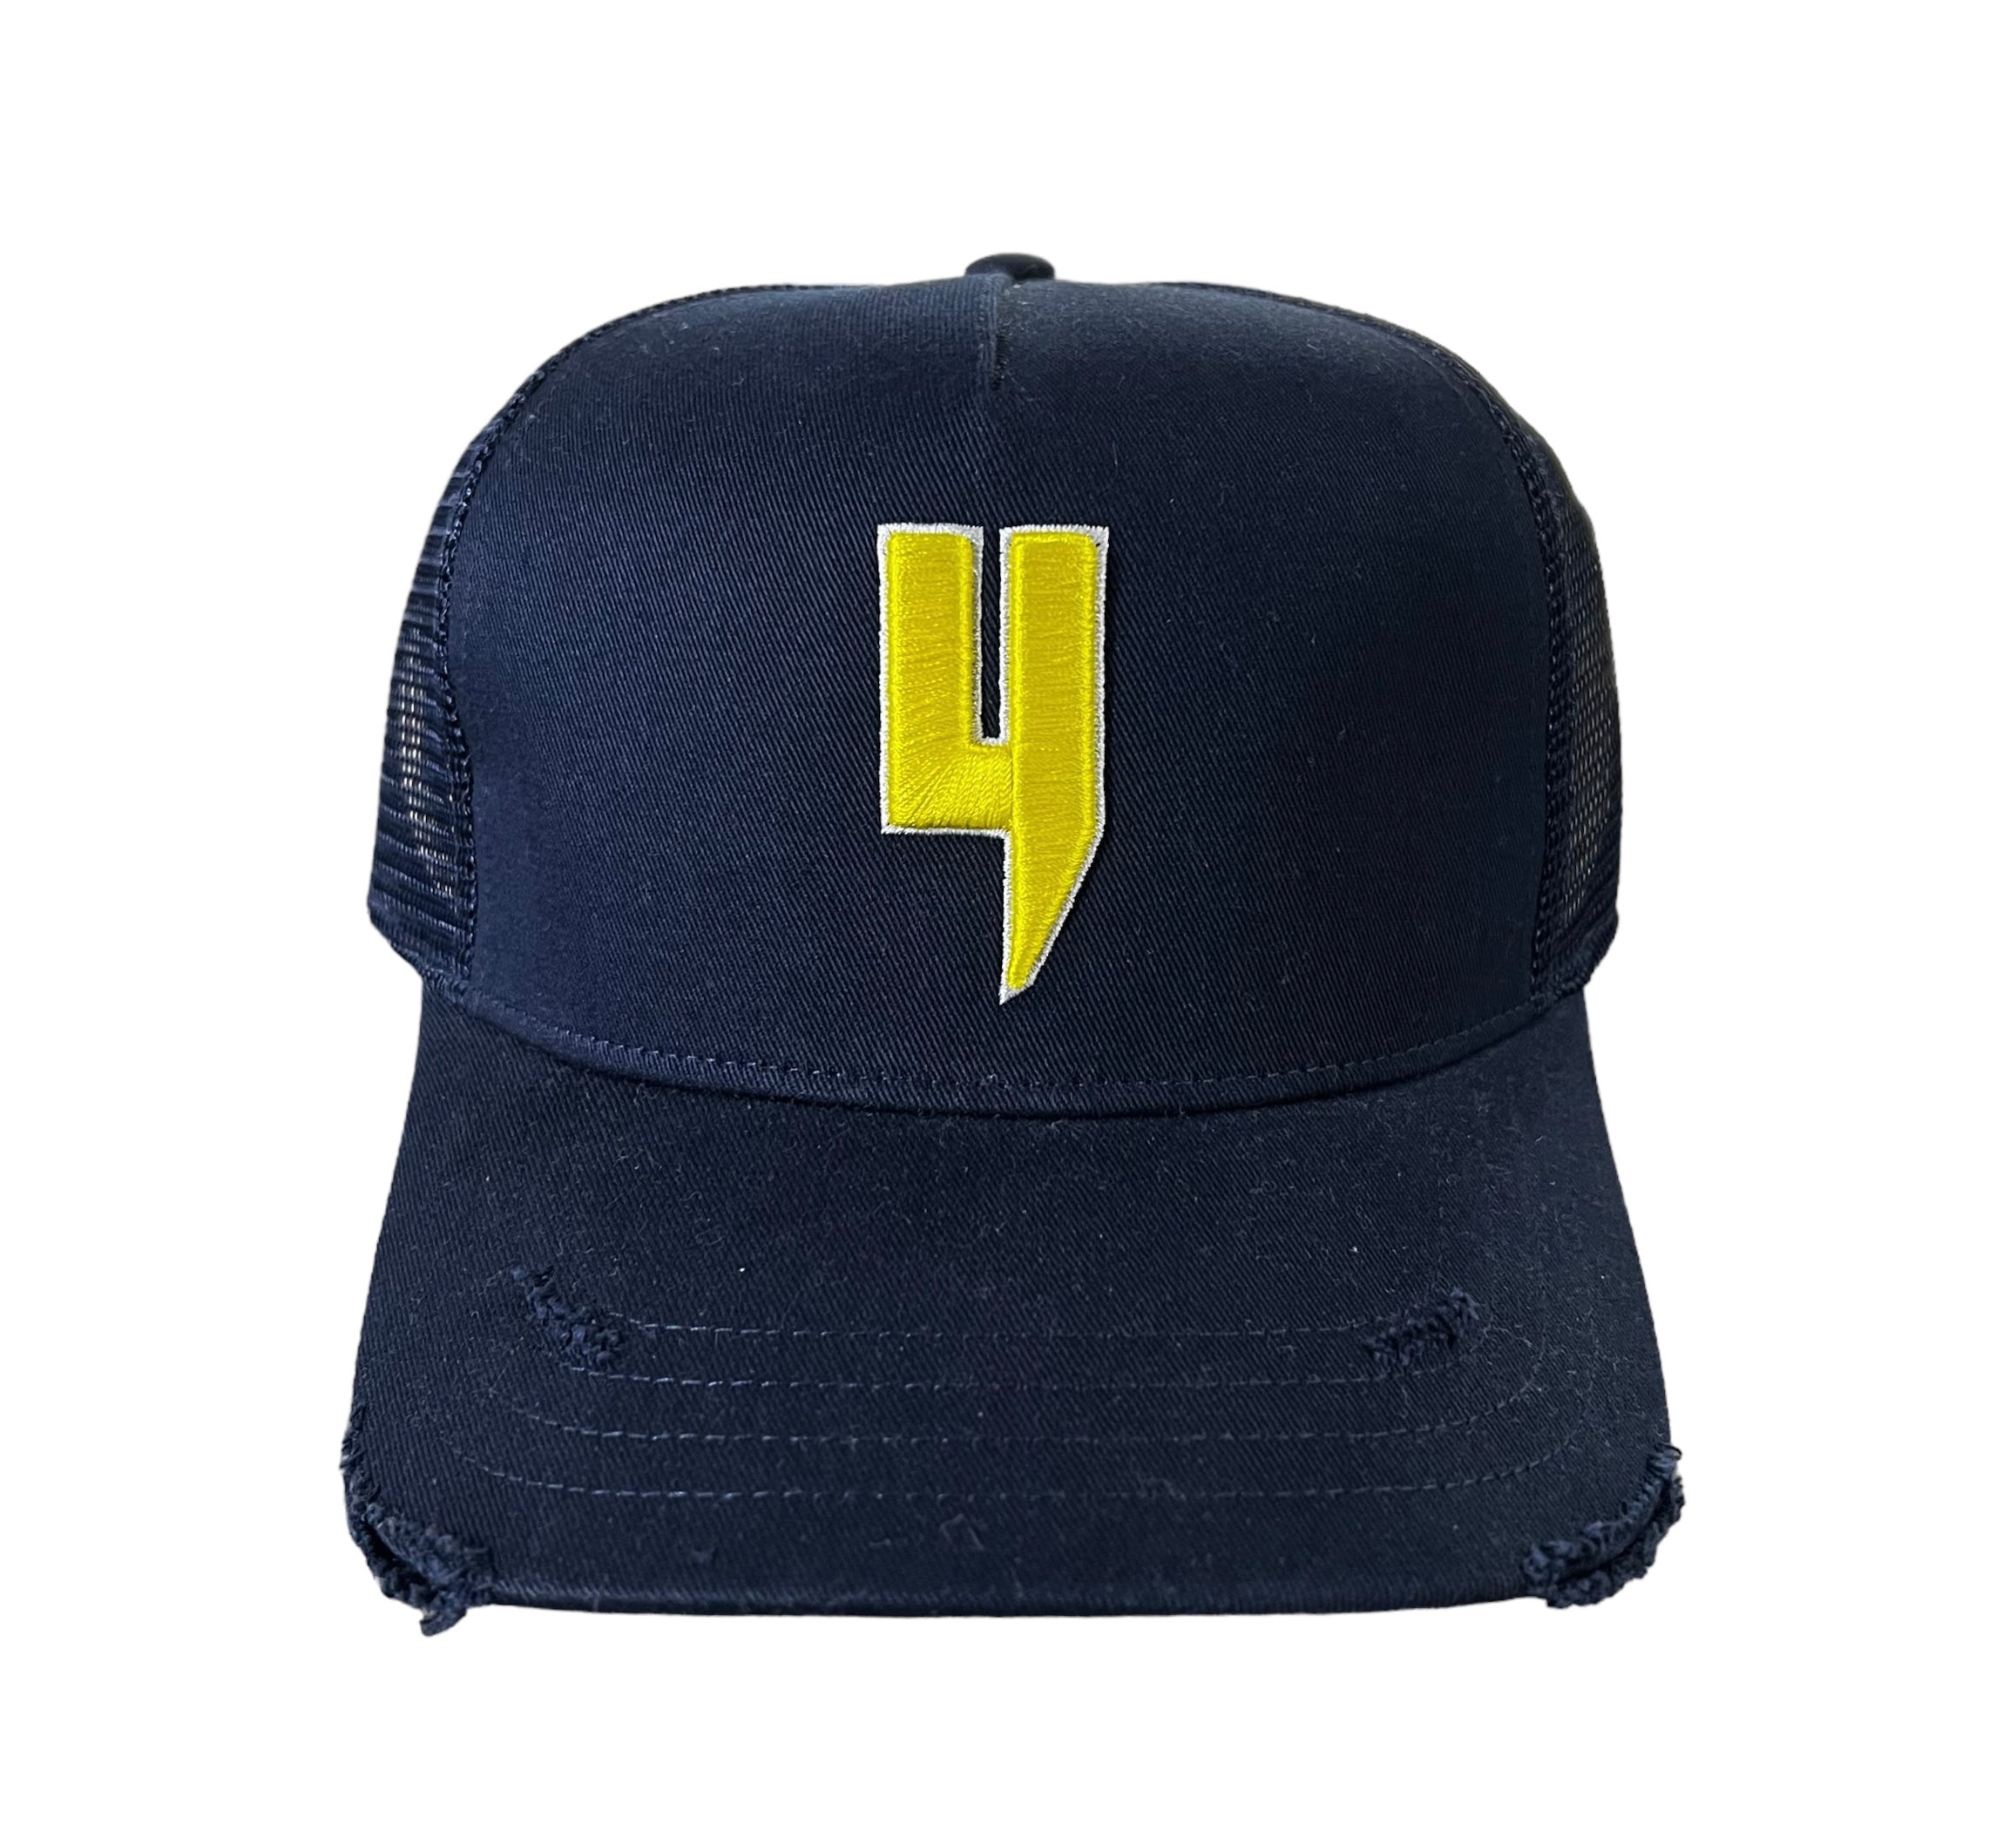 Yelir World Navy Yellow Distressed Hat